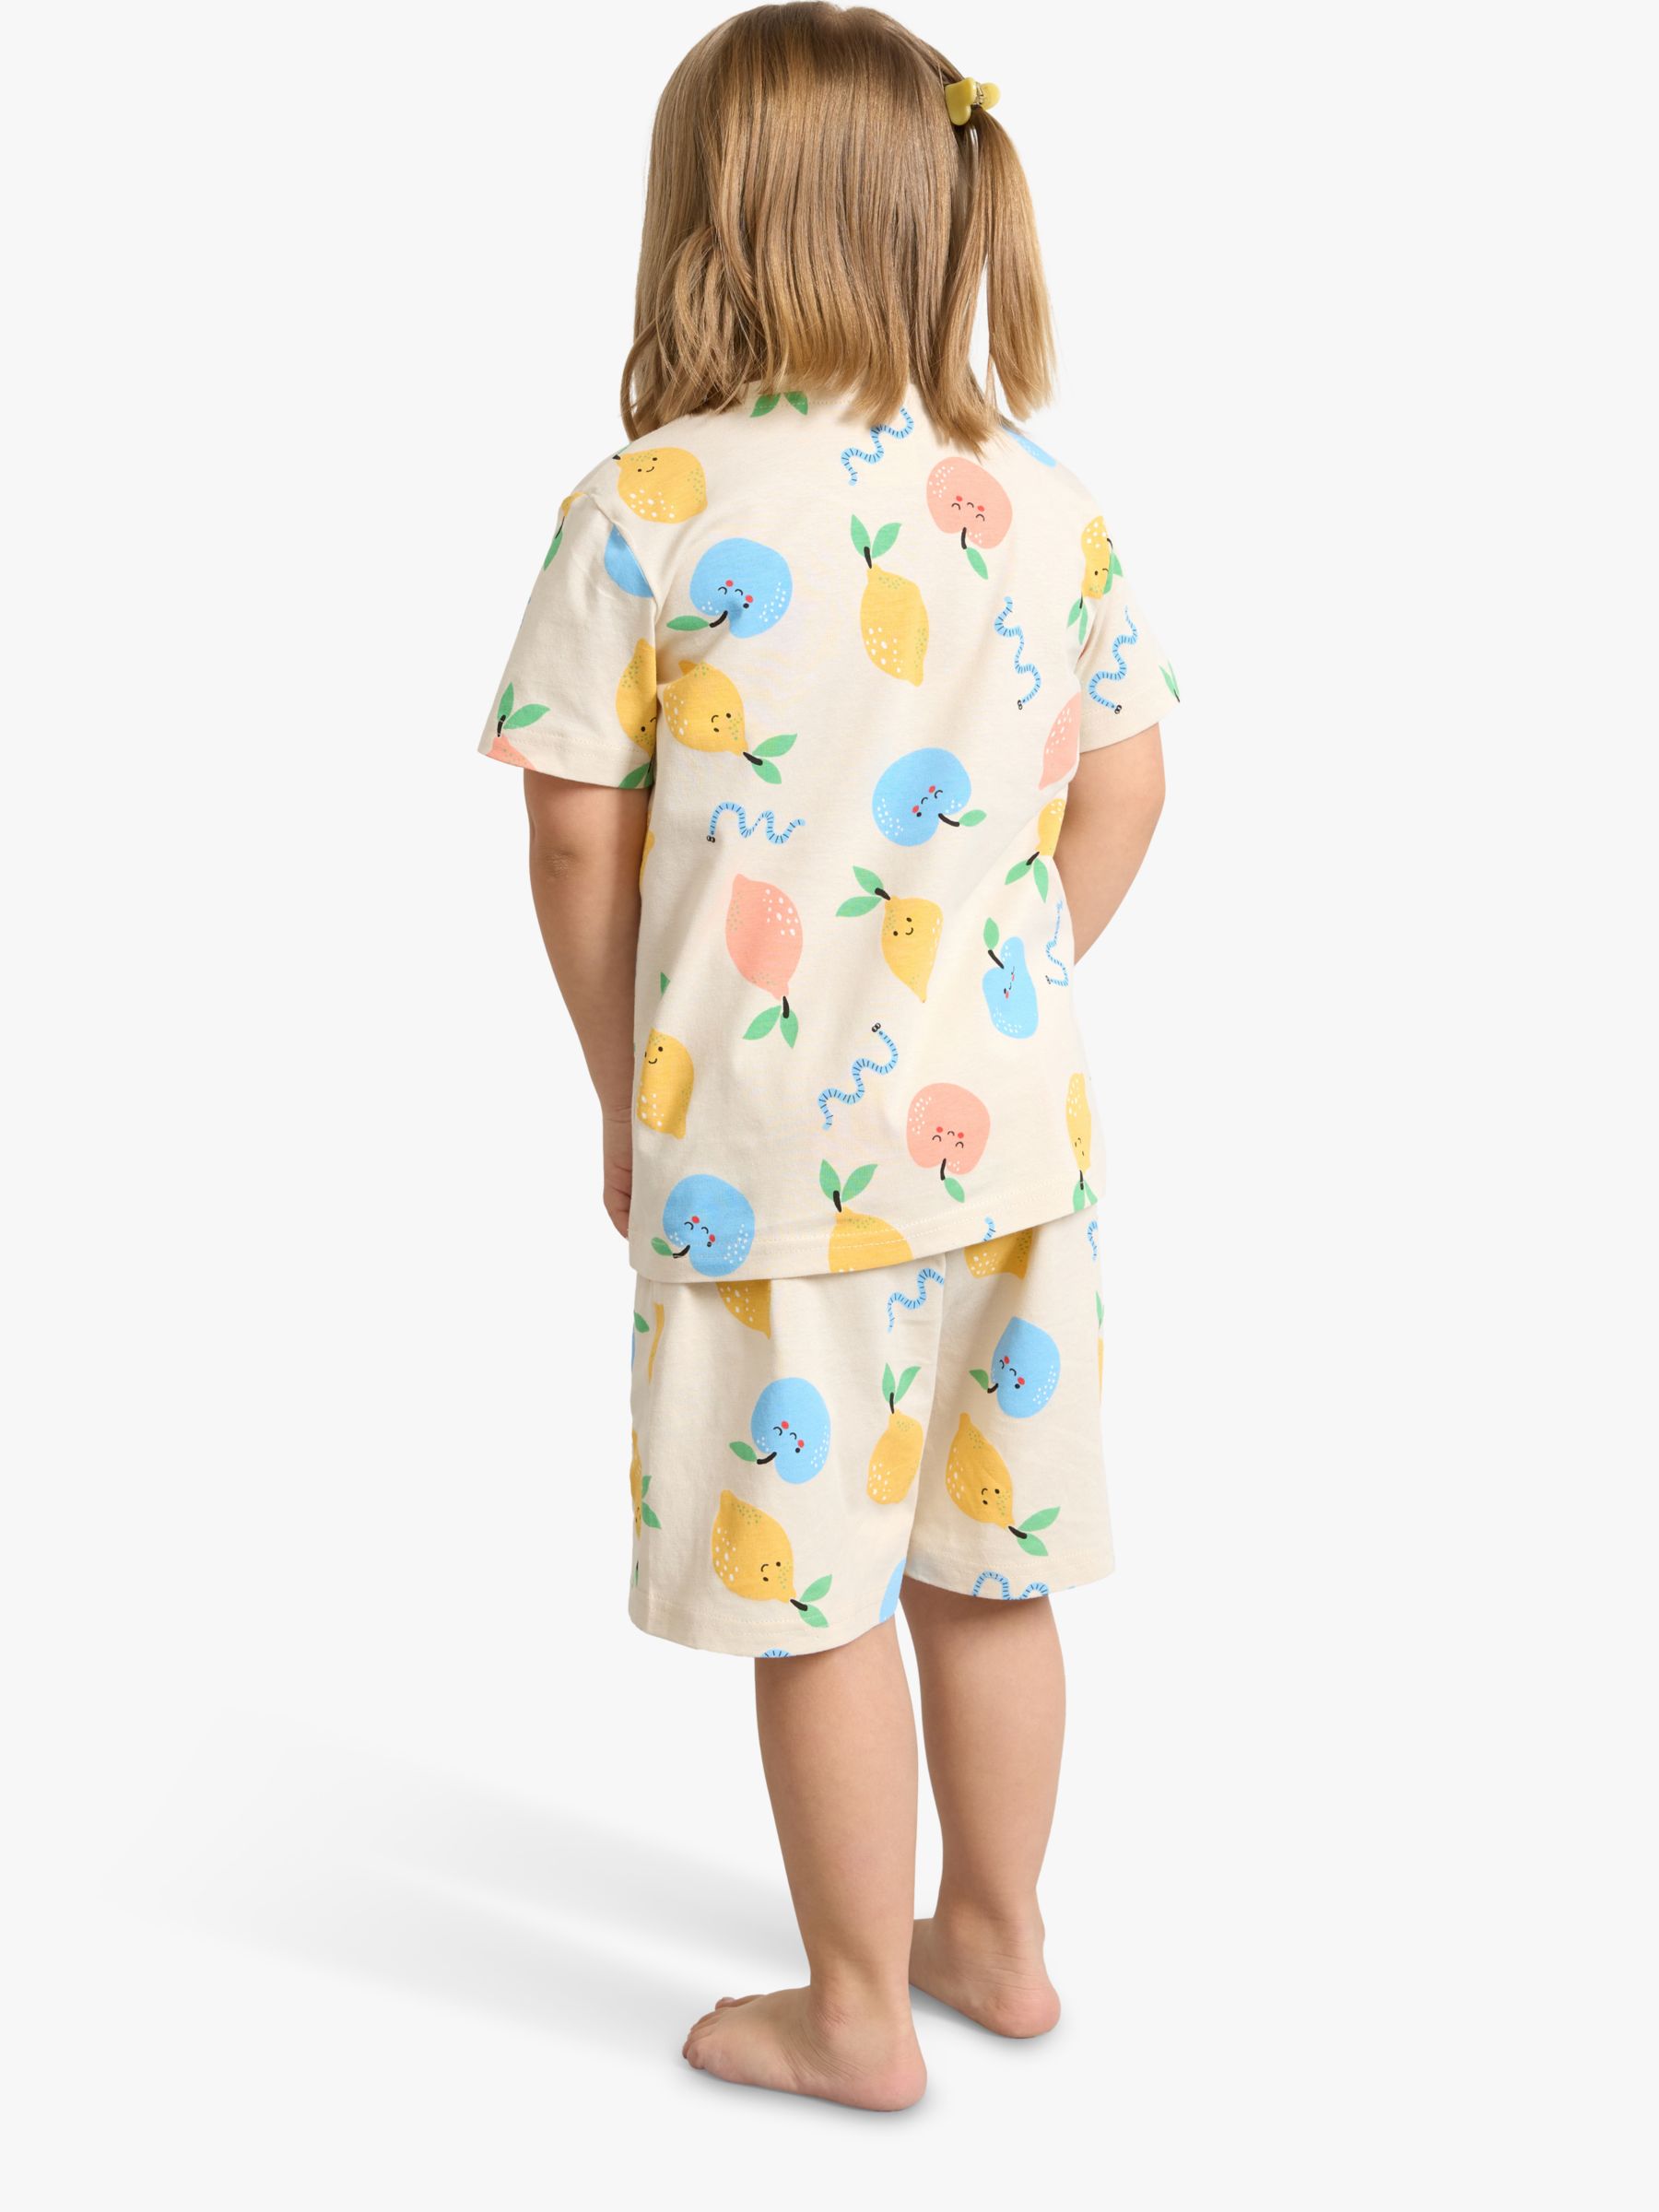 Lindex Kids' Fruit Print Short Pyjamas, Beige/Multi, 18-24 months